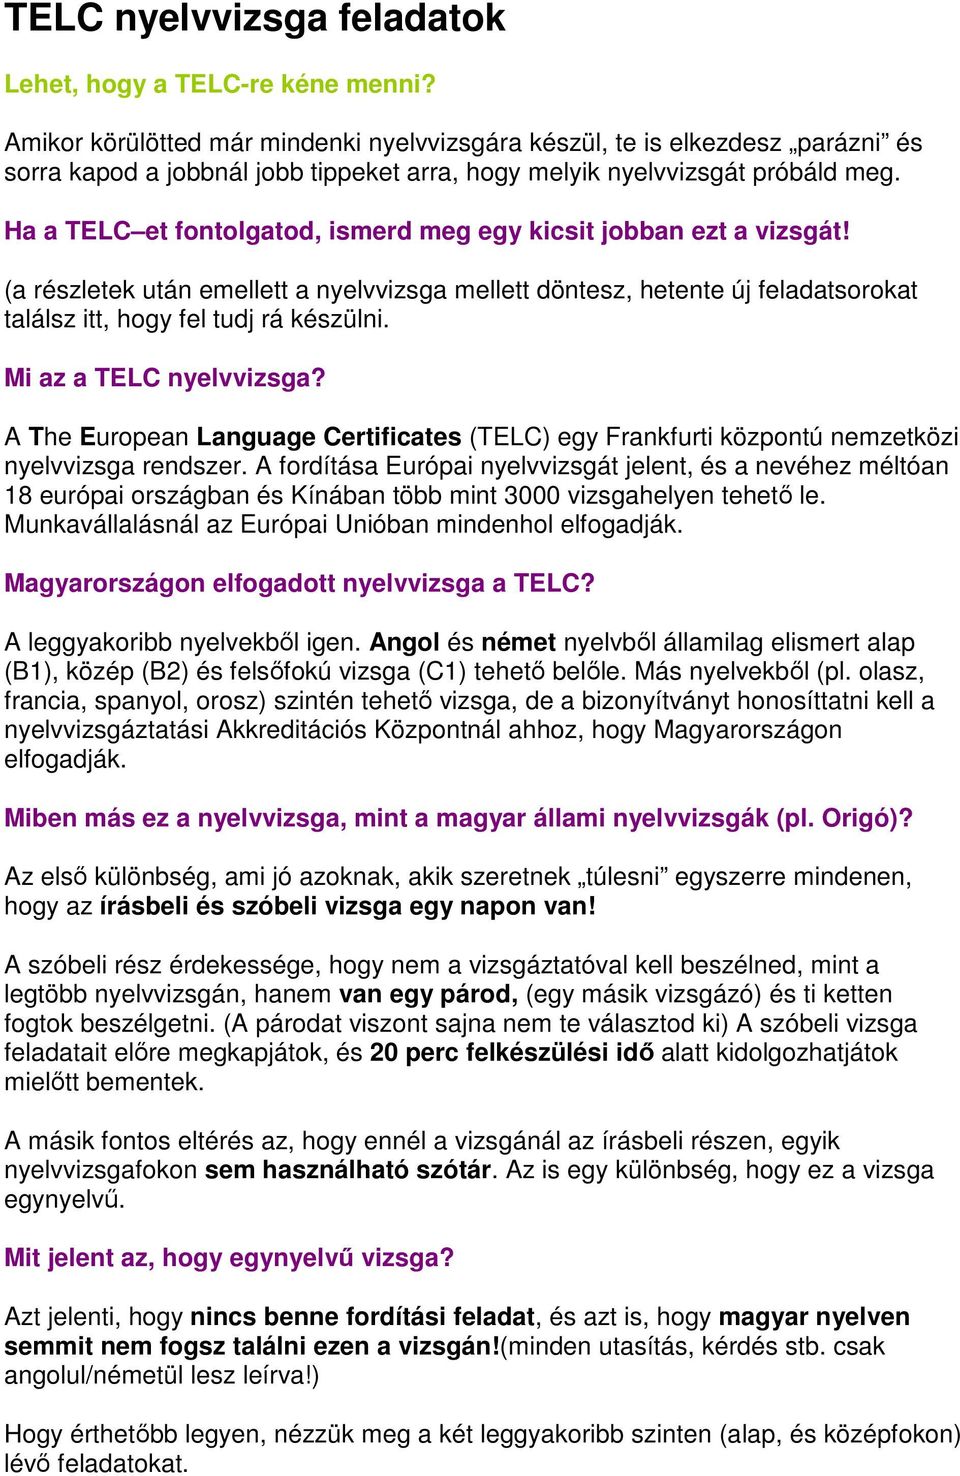 TELC nyelvvizsga feladatok - PDF Free Download